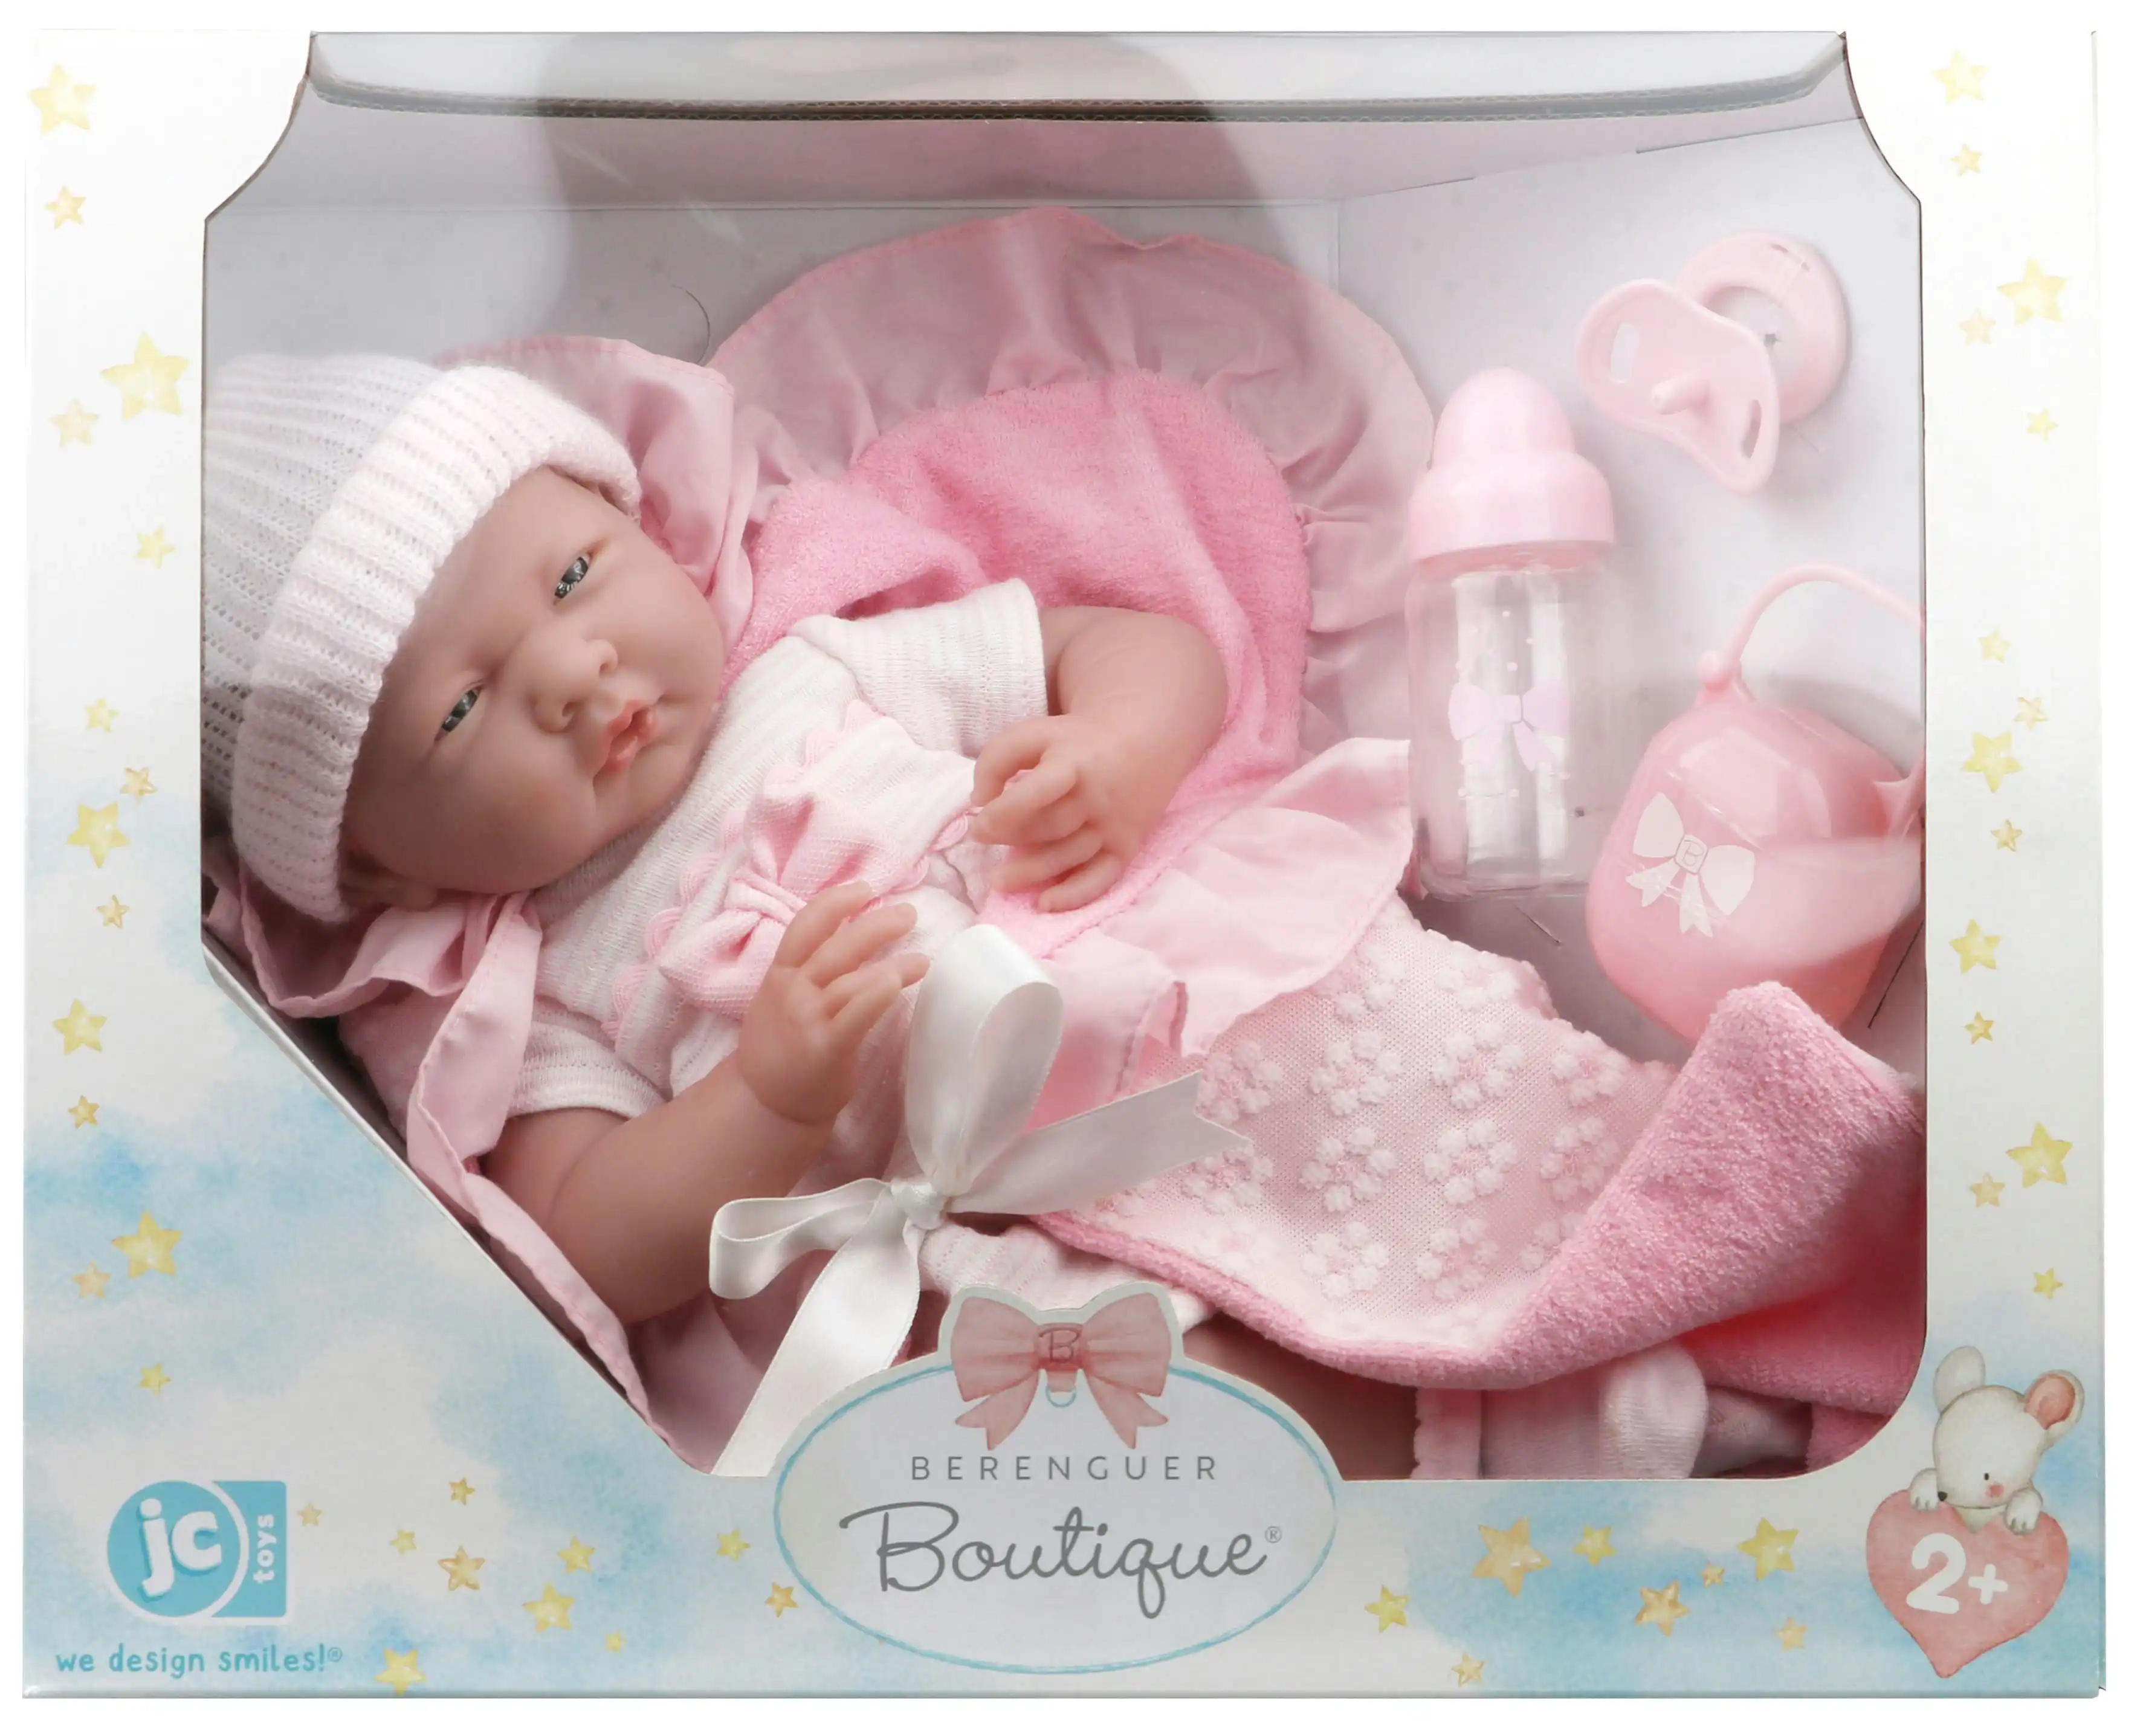 39cm La Newborn Soft Body Boutique Baby Doll Pink Set with Accessories